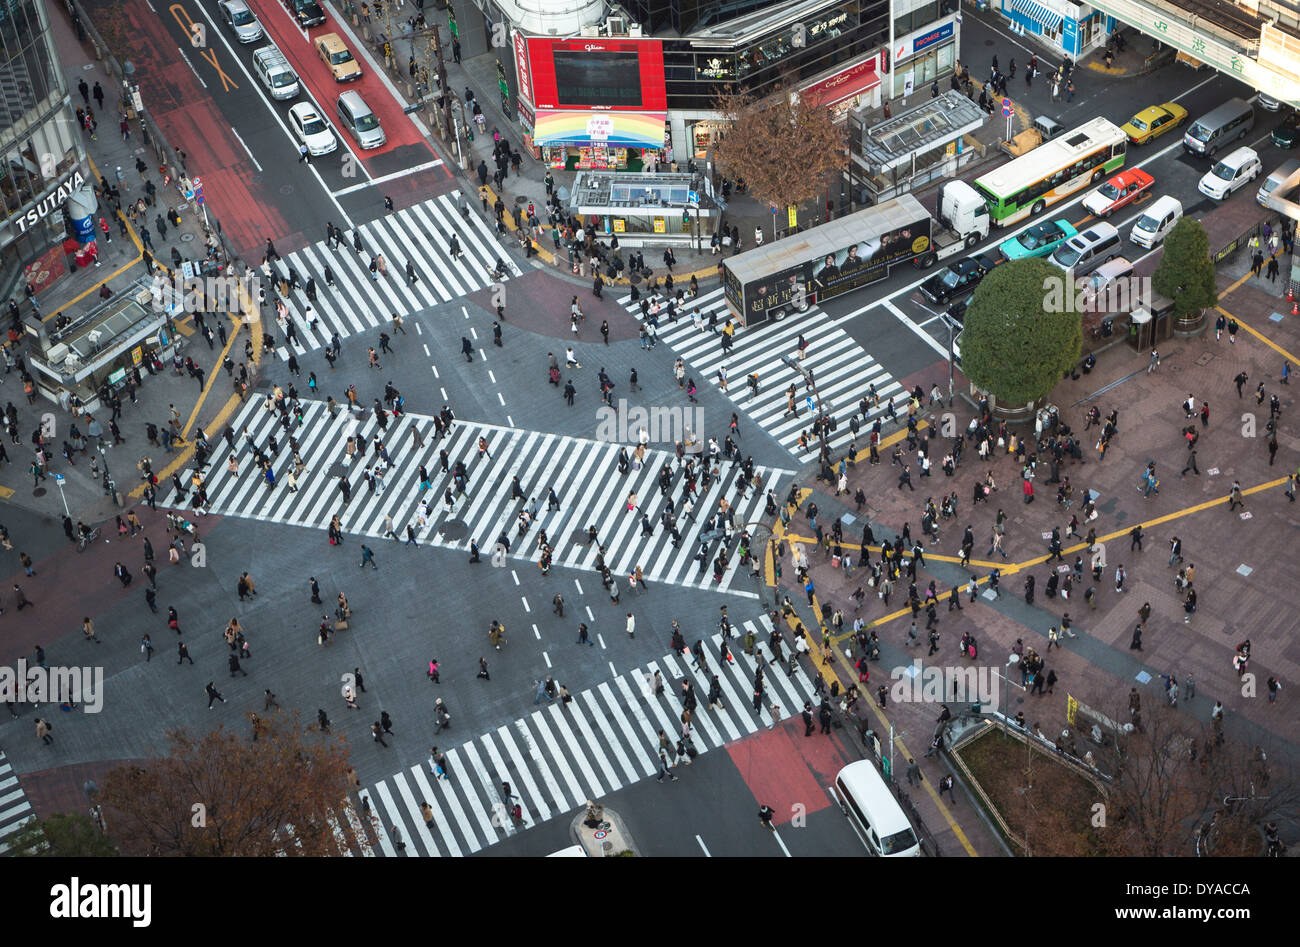 Japan, Asia, Tokyo, City, Hachiko, Shibuya, city, crossing, crowd, pedestrian, station, west side, traffic Stock Photo